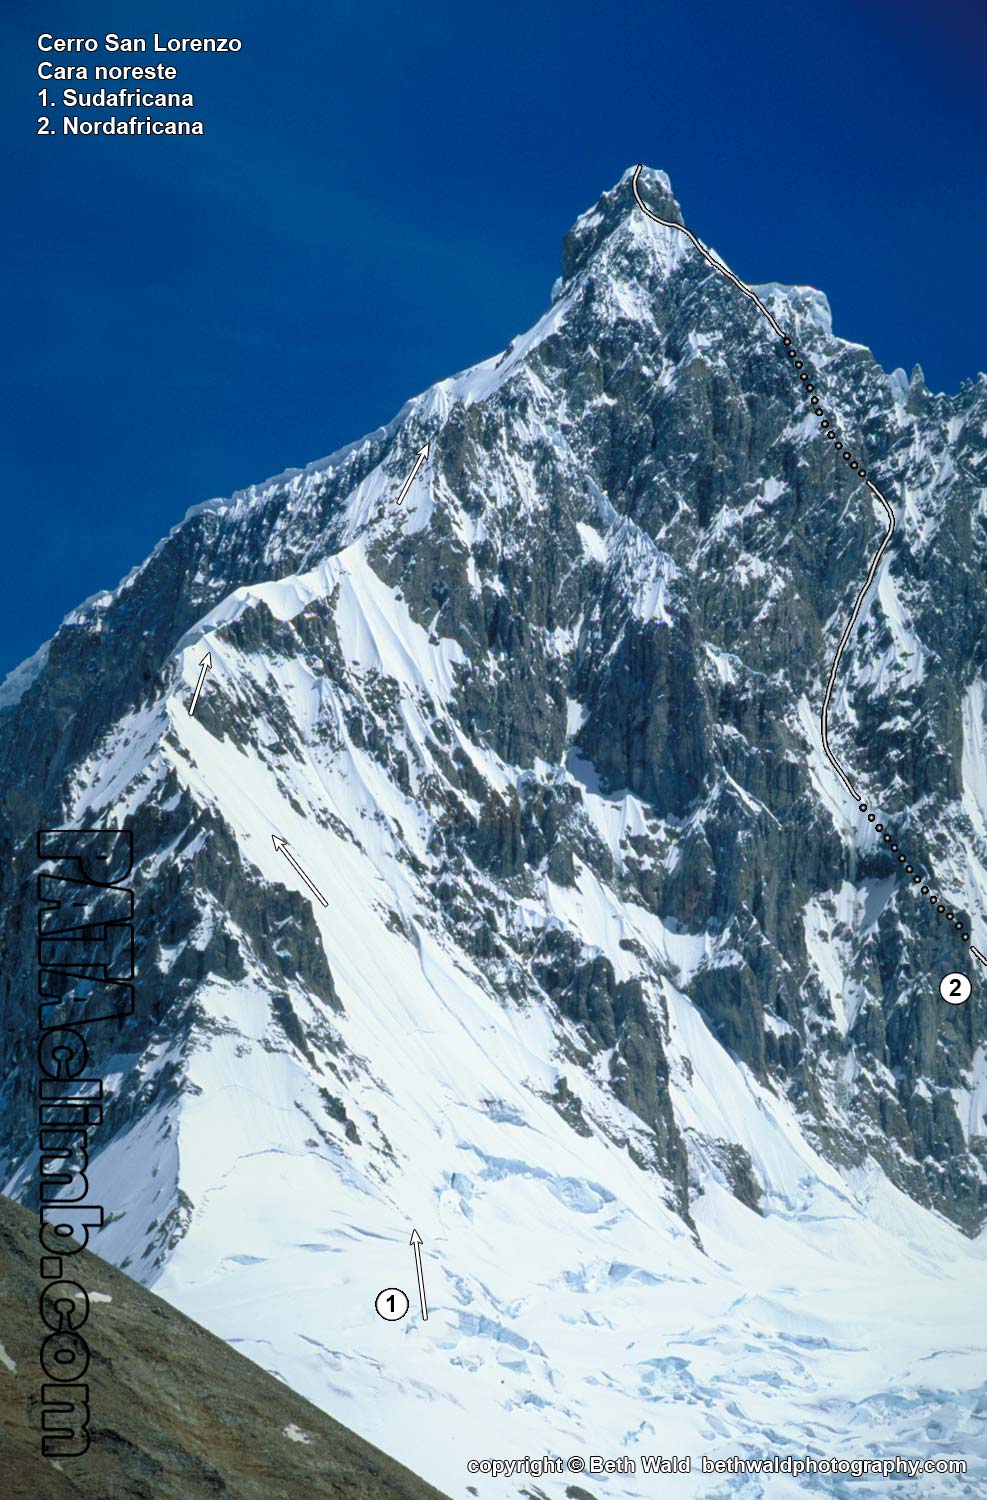 Серро Сан-Лоренцо (Cerro San Lorenzo), маршруты "Nordafricana" и "Sudafricana" 